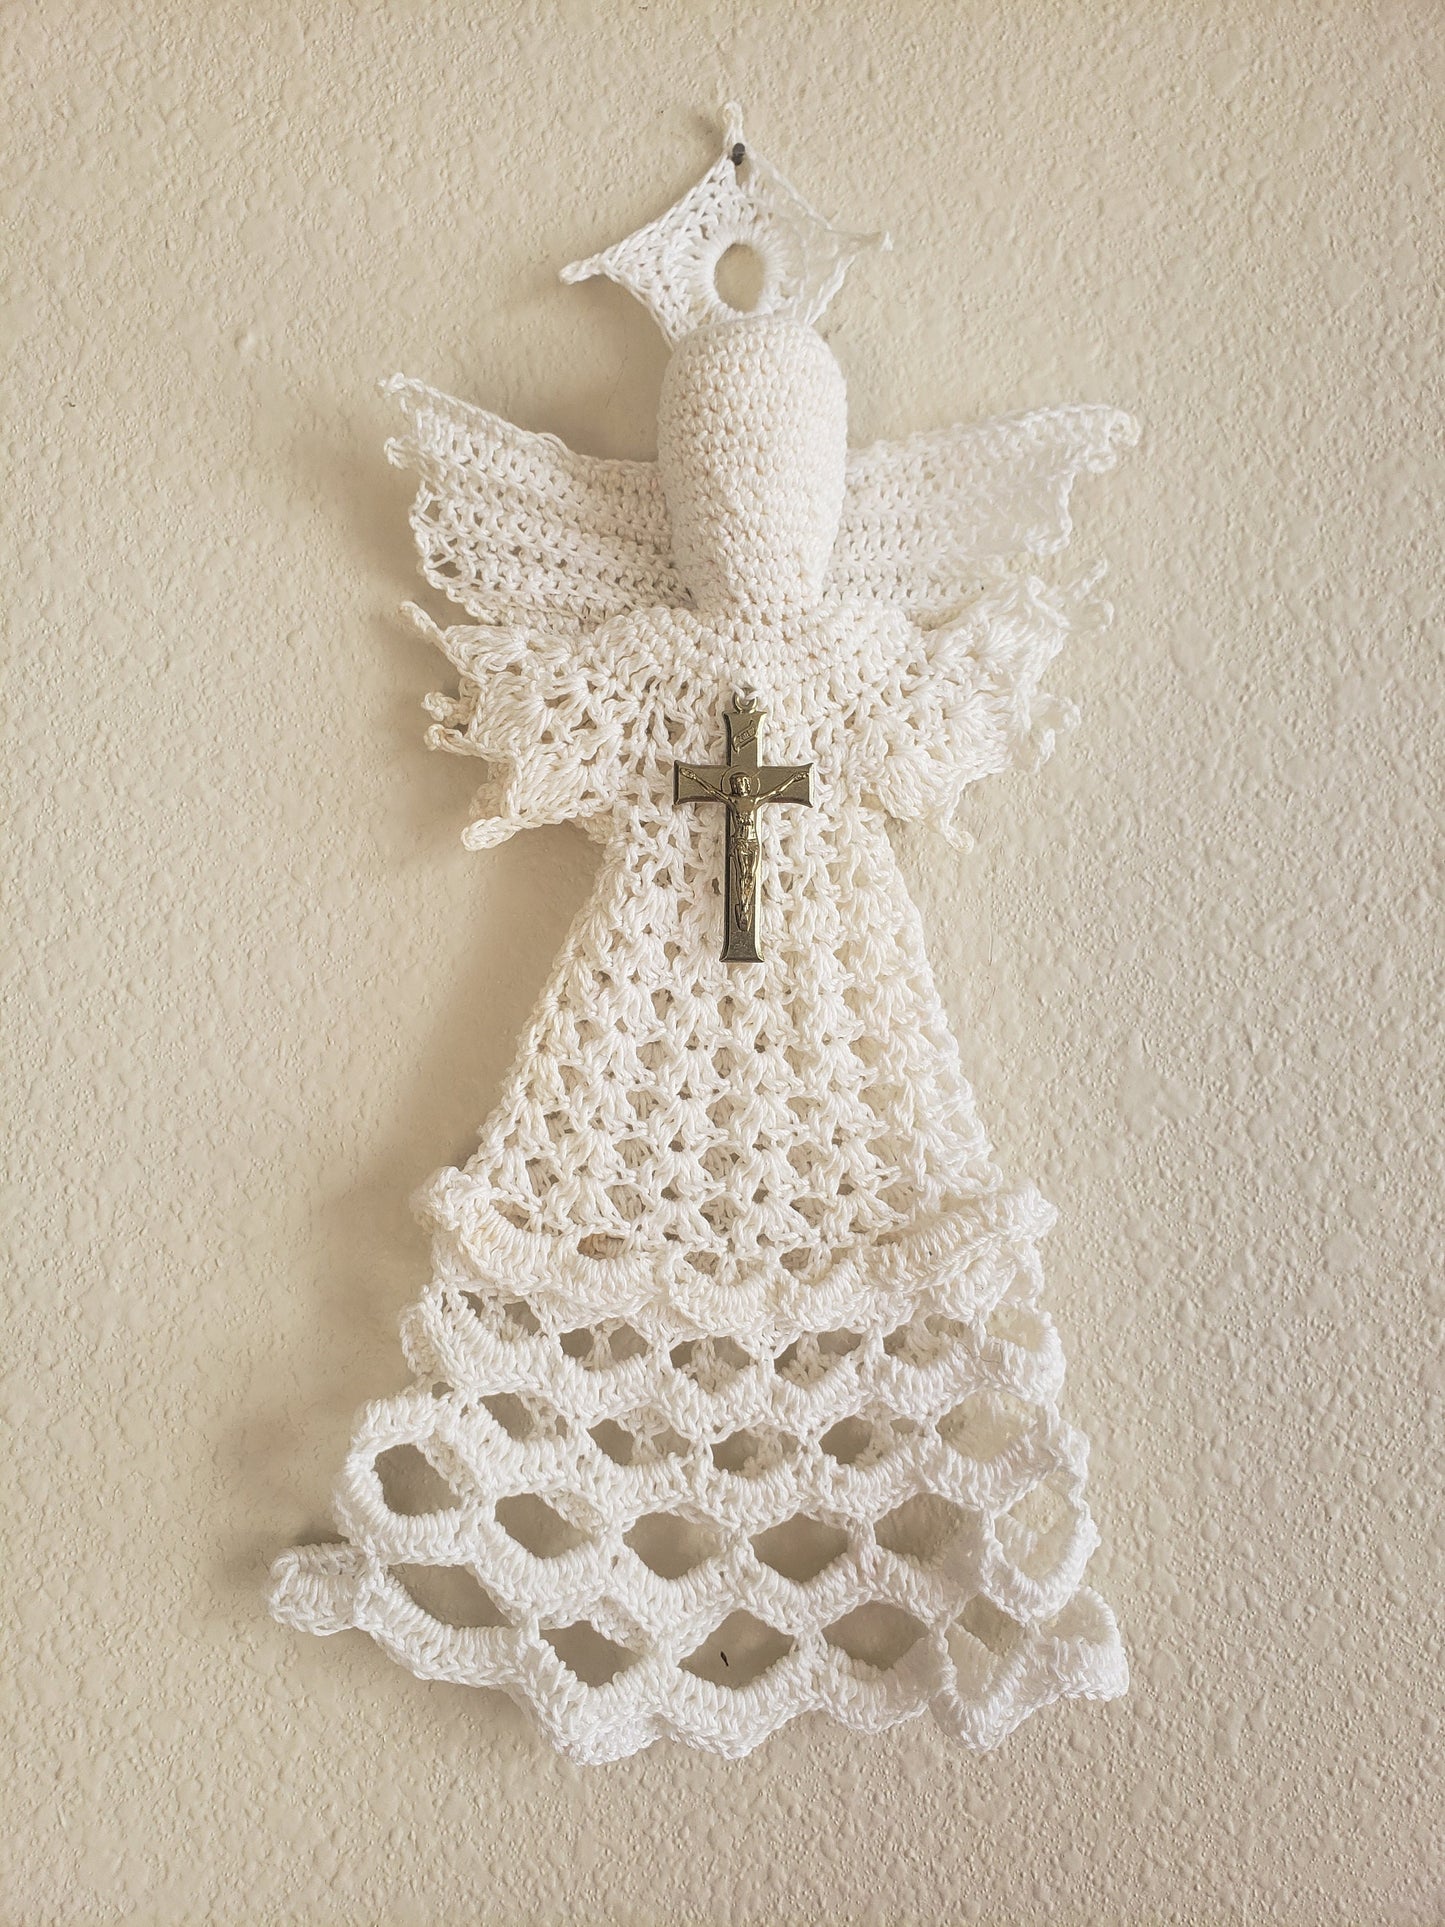 Handmade Vintage Crochet Angel Tree Topper